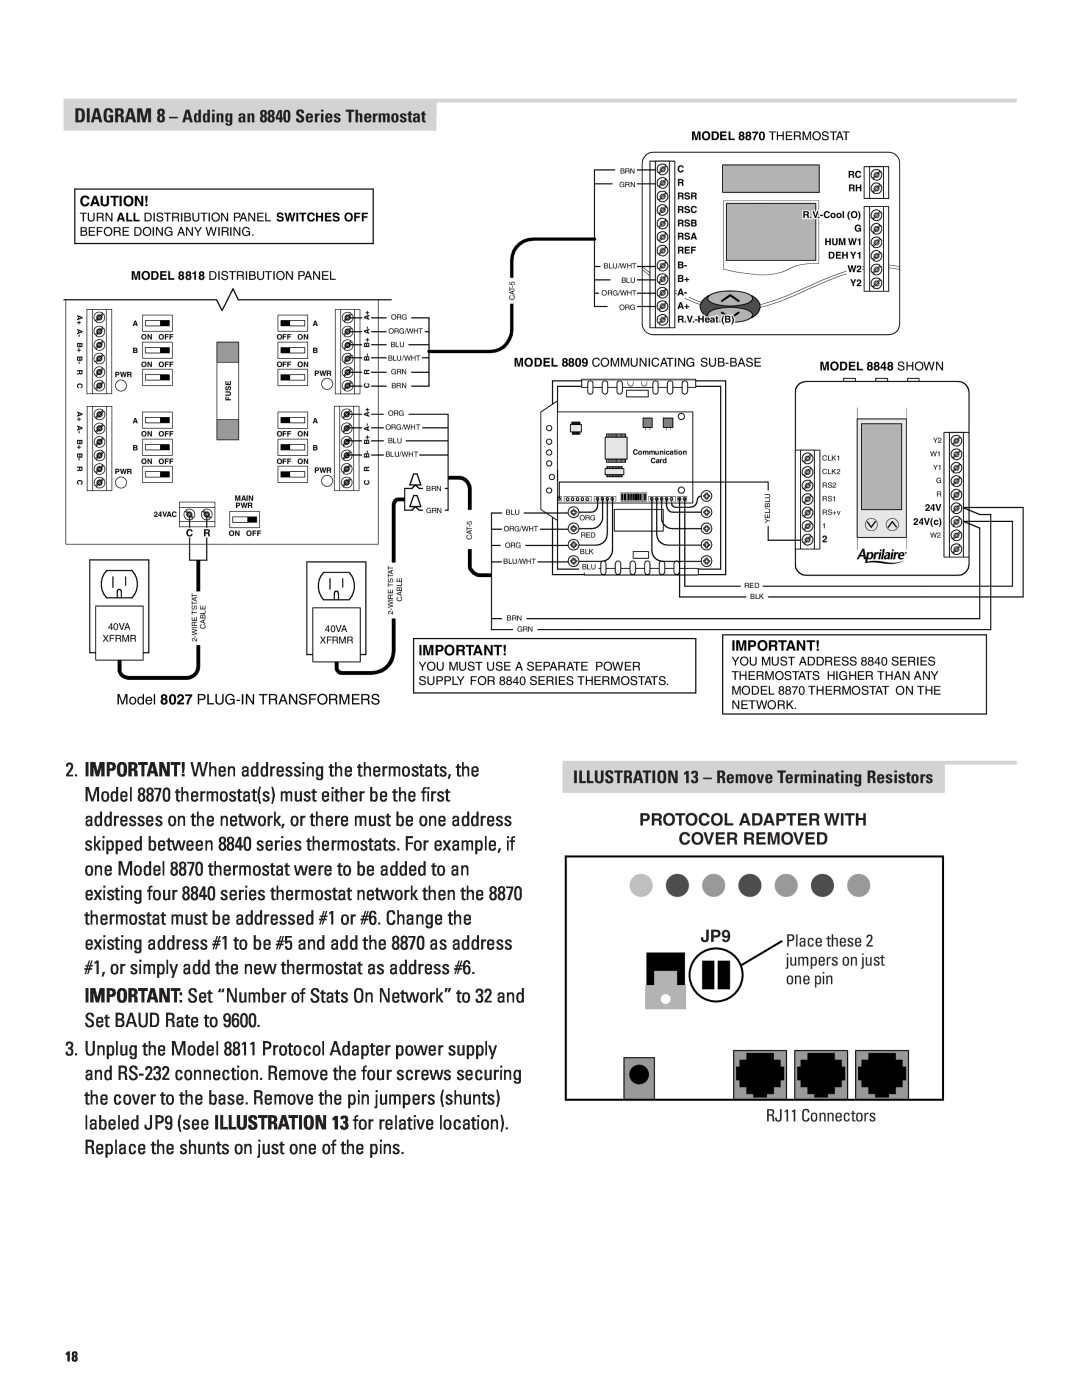 Echo 8870 installation manual DIAGRAM 8 - Adding an 8840 Series Thermostat, ILLUSTRATION 13 - Remove Terminating Resistors 